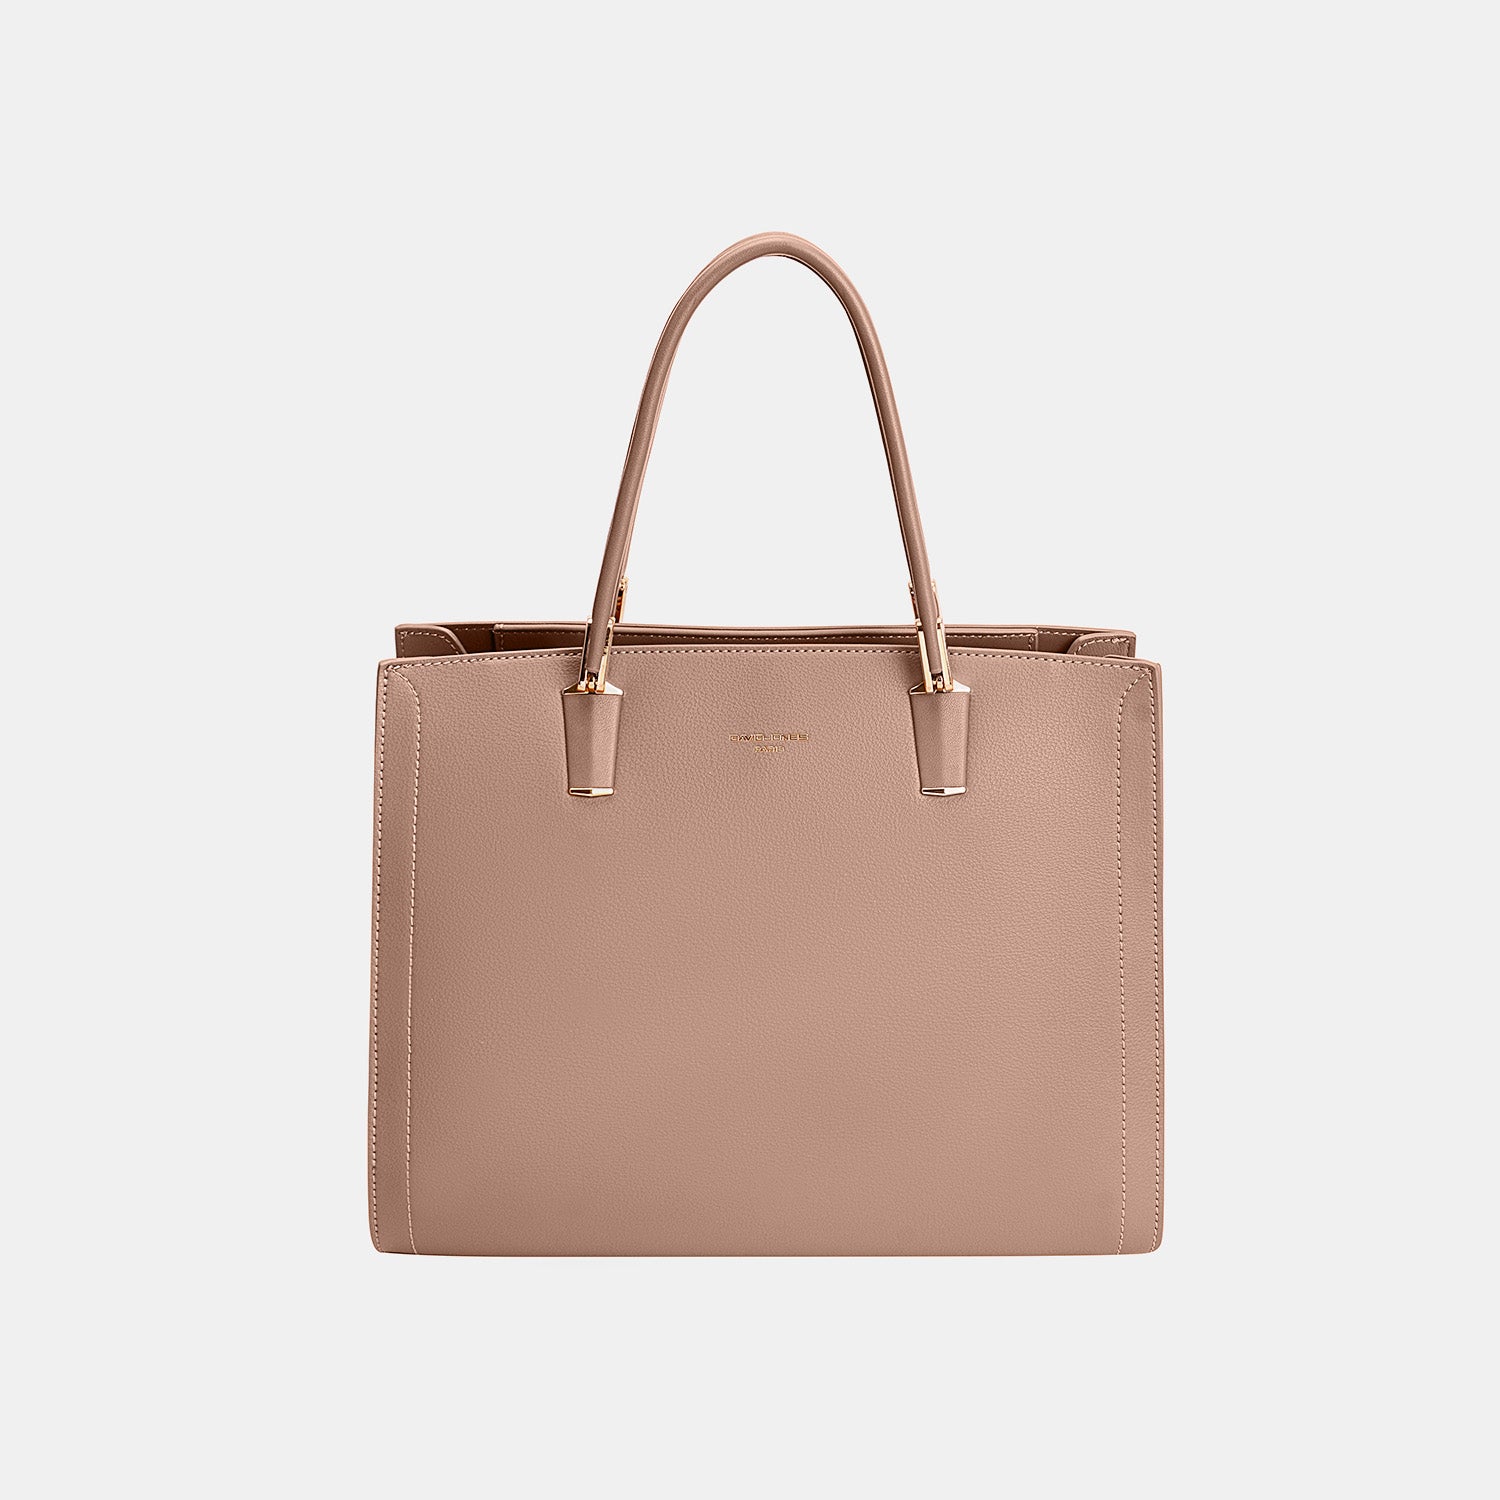 PU Leather Medium Handbag | Handbags - CHANELIA